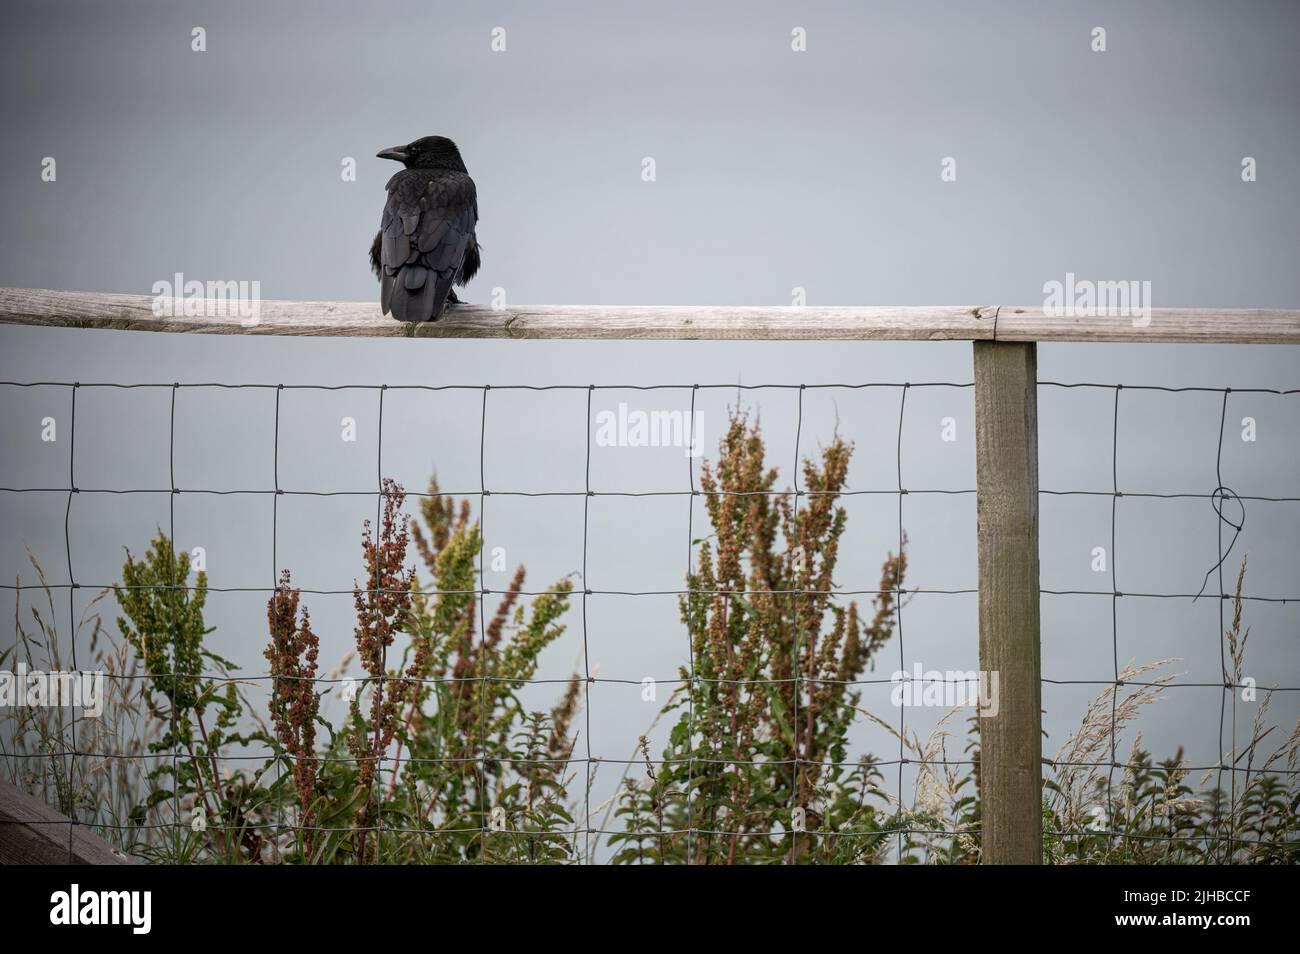 A crow looking out to sea at Morfa Nefyn on the Llyn Peninsula, Gwynneth, Wales. Stock Photo